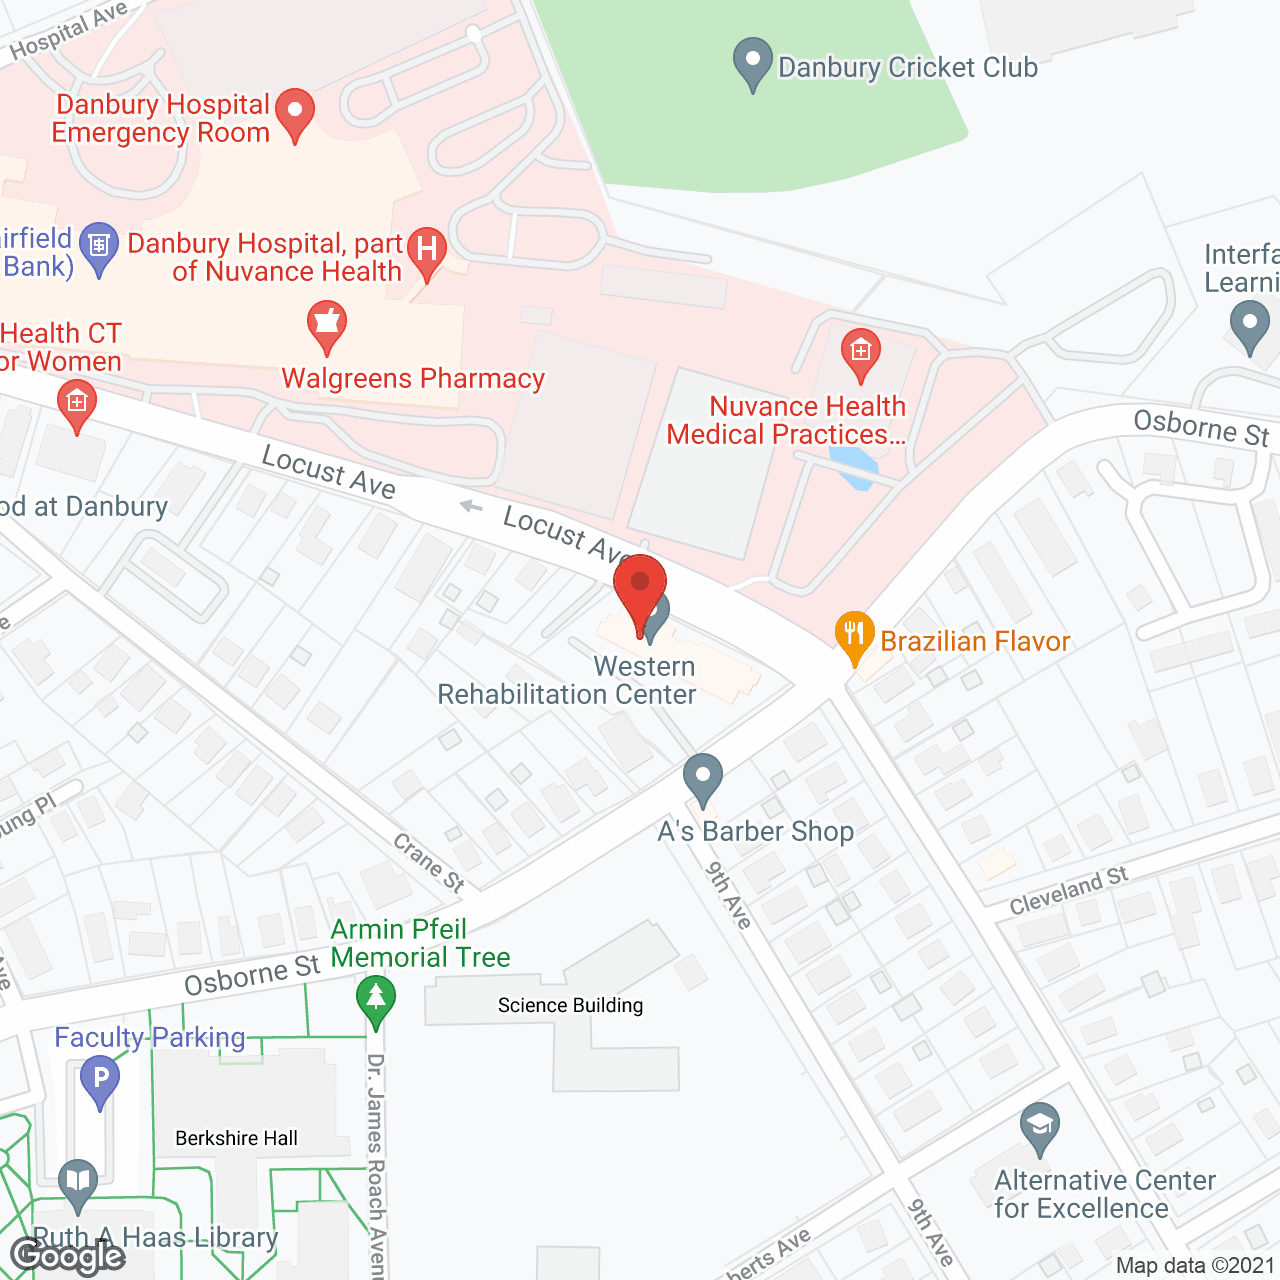 Western Rehabilitation Care Center in google map